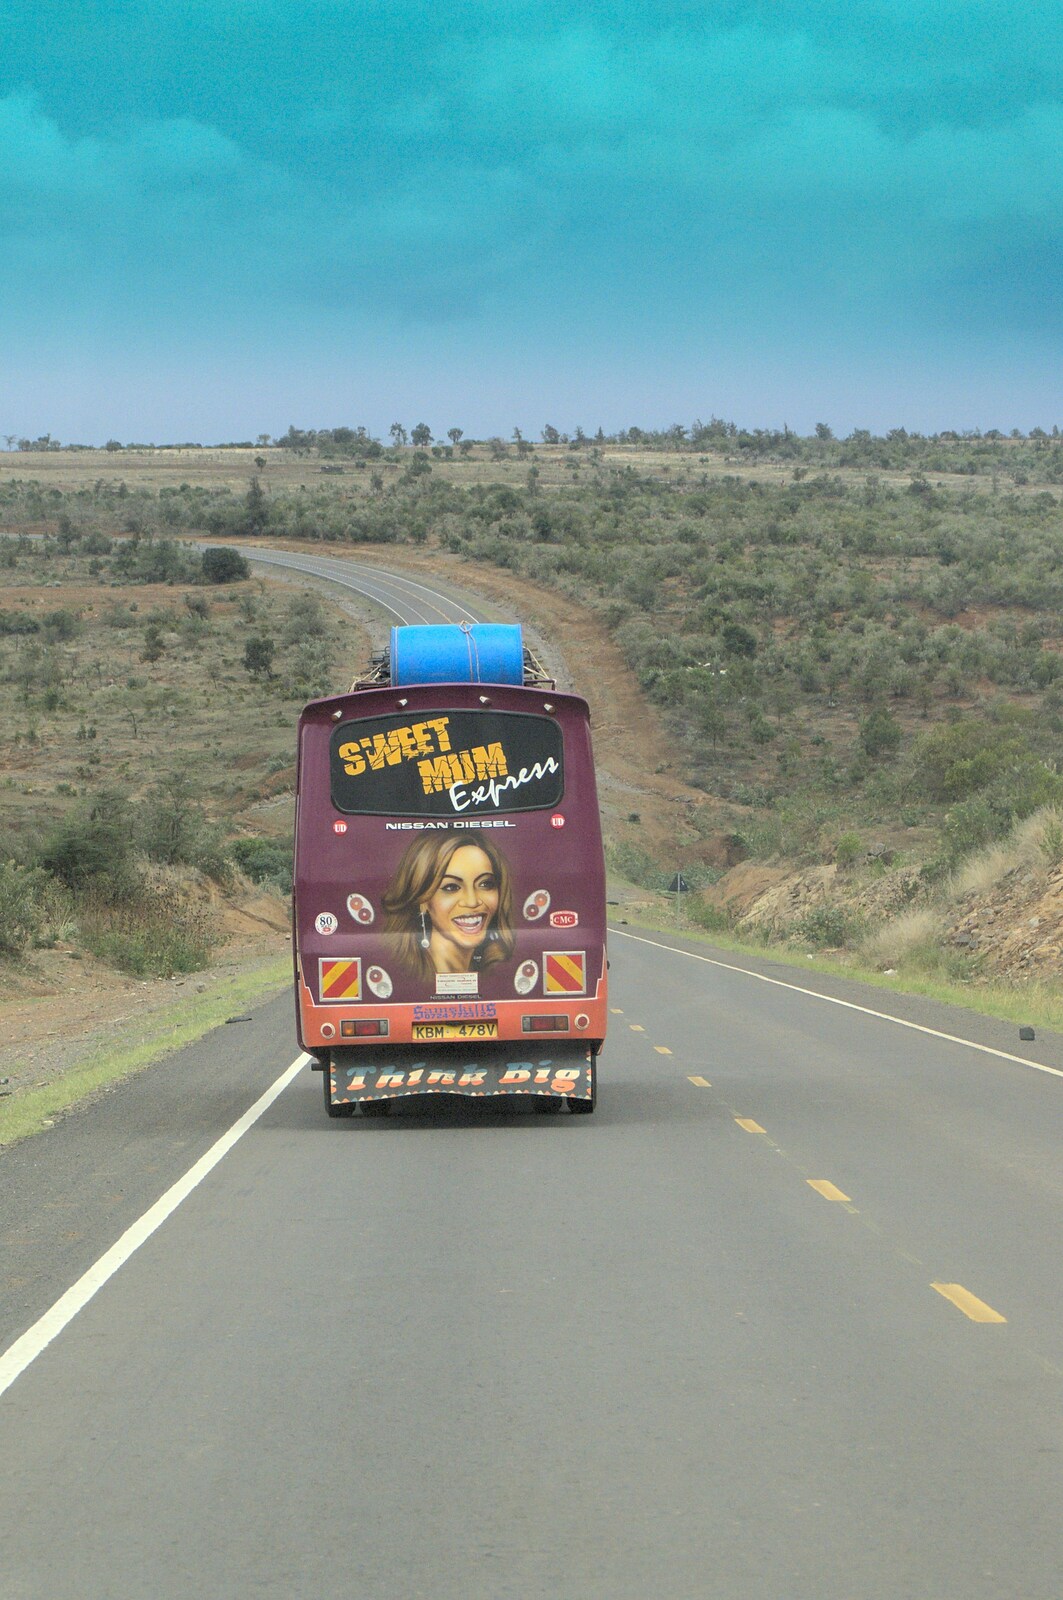 We follow a bus for a few miles from Nairobi and the Road to Maasai Mara, Kenya, Africa - 1st November 2010